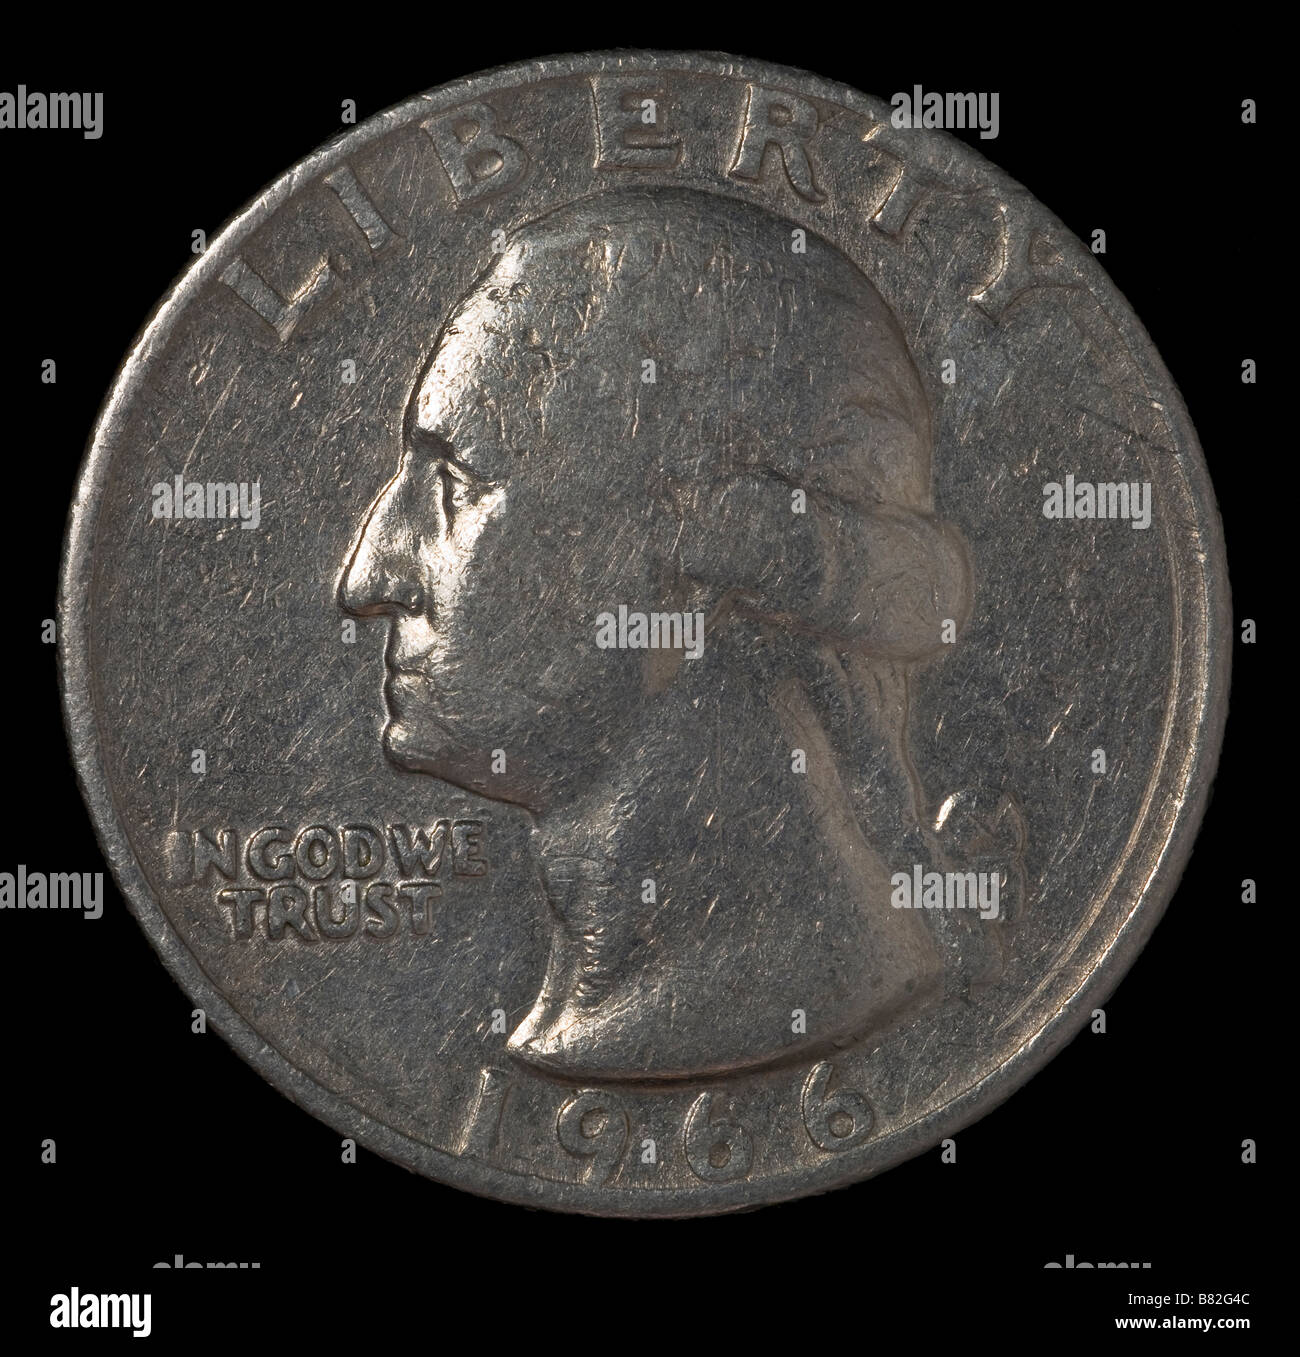 Stati Uniti d'America trimestre 25 centesimi moneta con George Washington profile Foto Stock